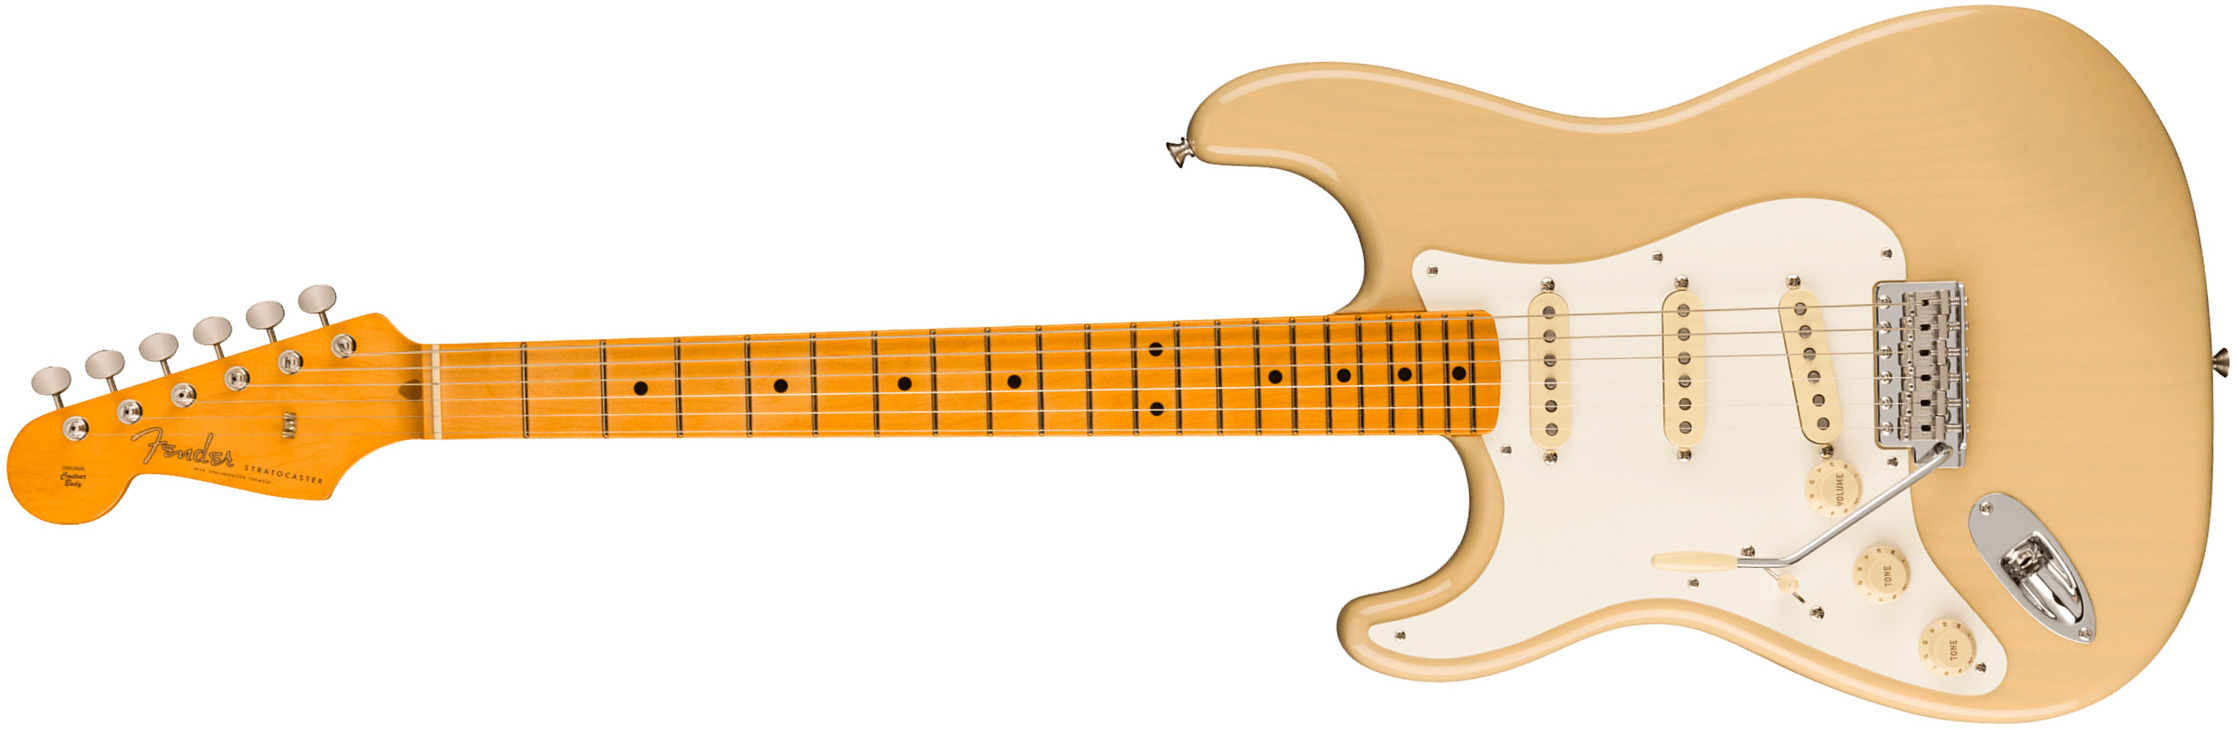 Fender Strat 1957 American Vintage Ii Lh Gaucher Usa 3s Trem Mn - Vintage Blonde - Left-handed electric guitar - Main picture